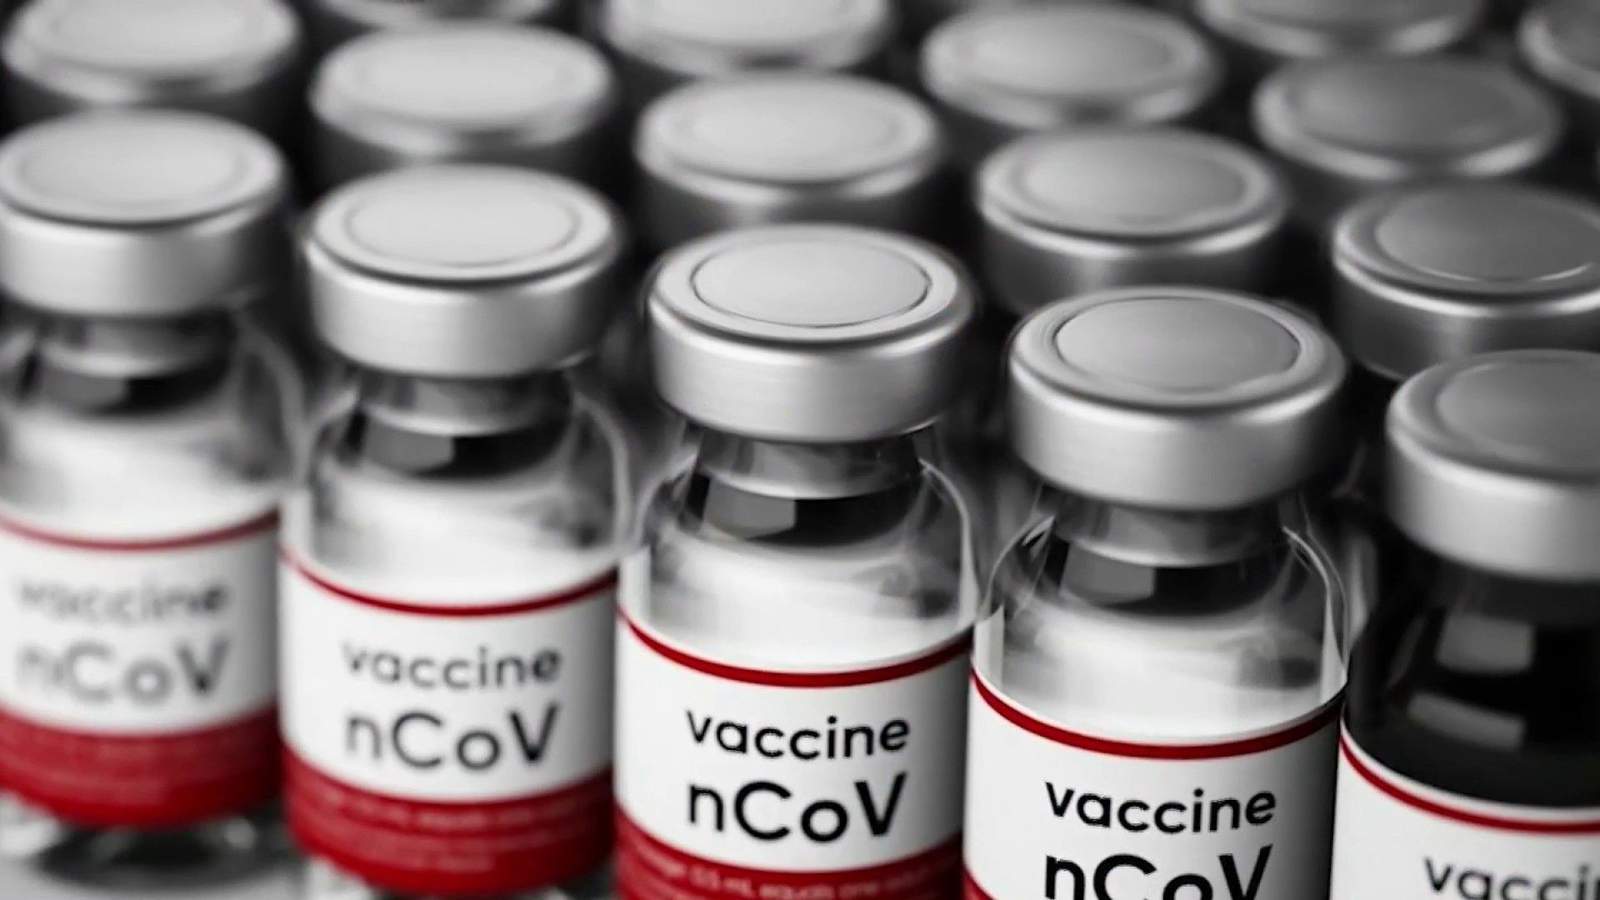 Texas Medical Center officials discuss coronavirus vaccine distributions in Houston area